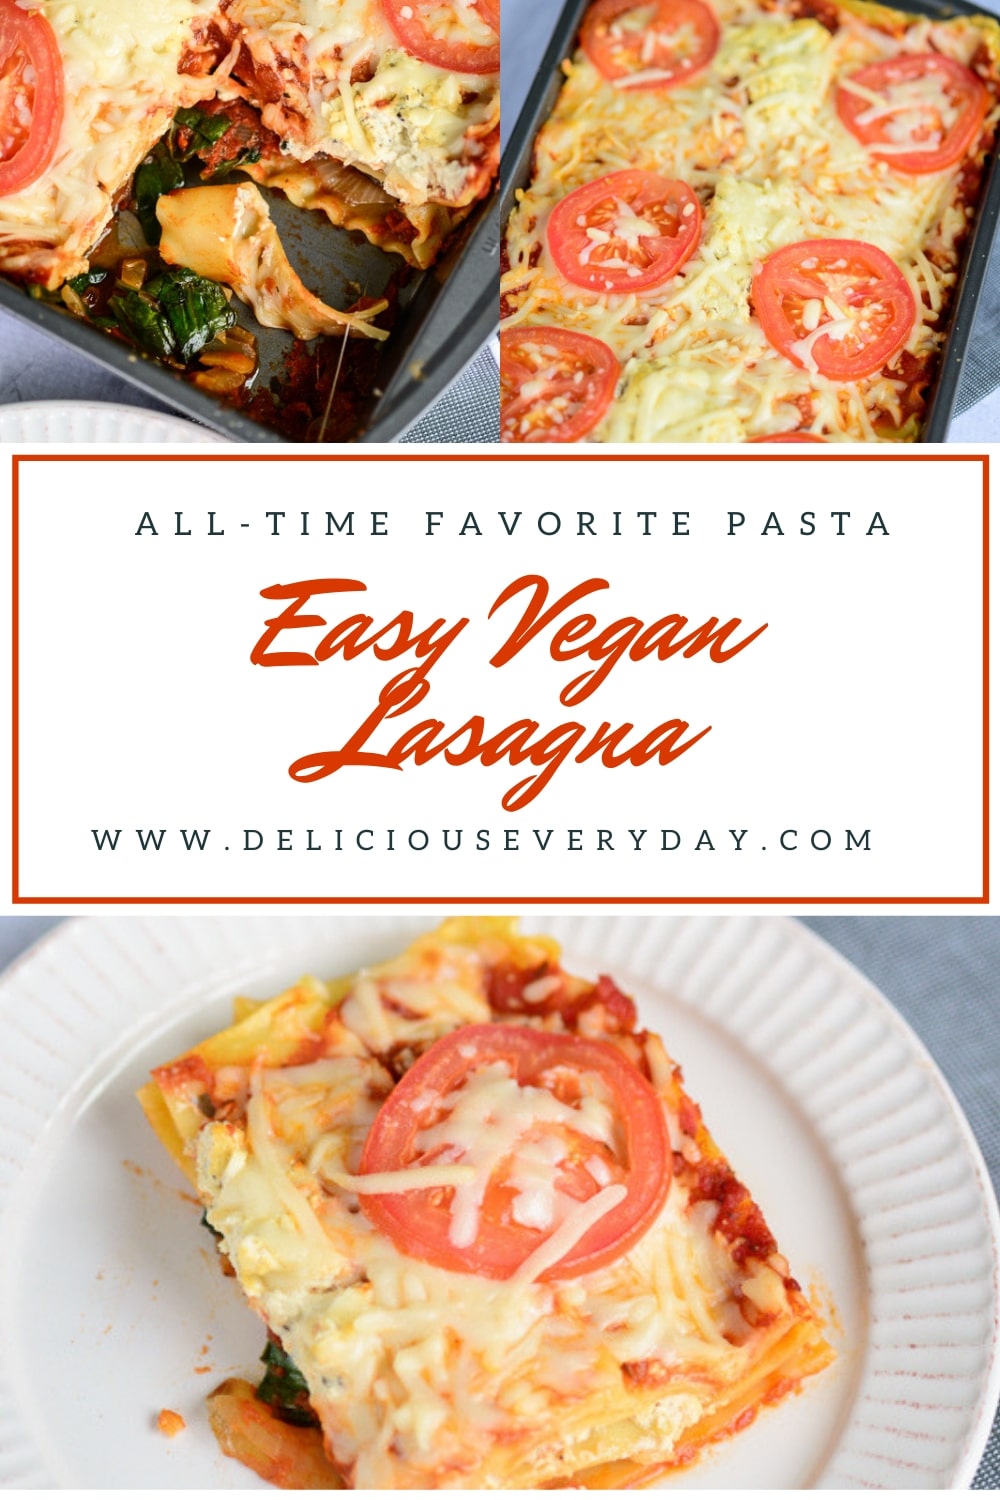 The Internet's Best Vegan Lasagna | Delicious Everyday